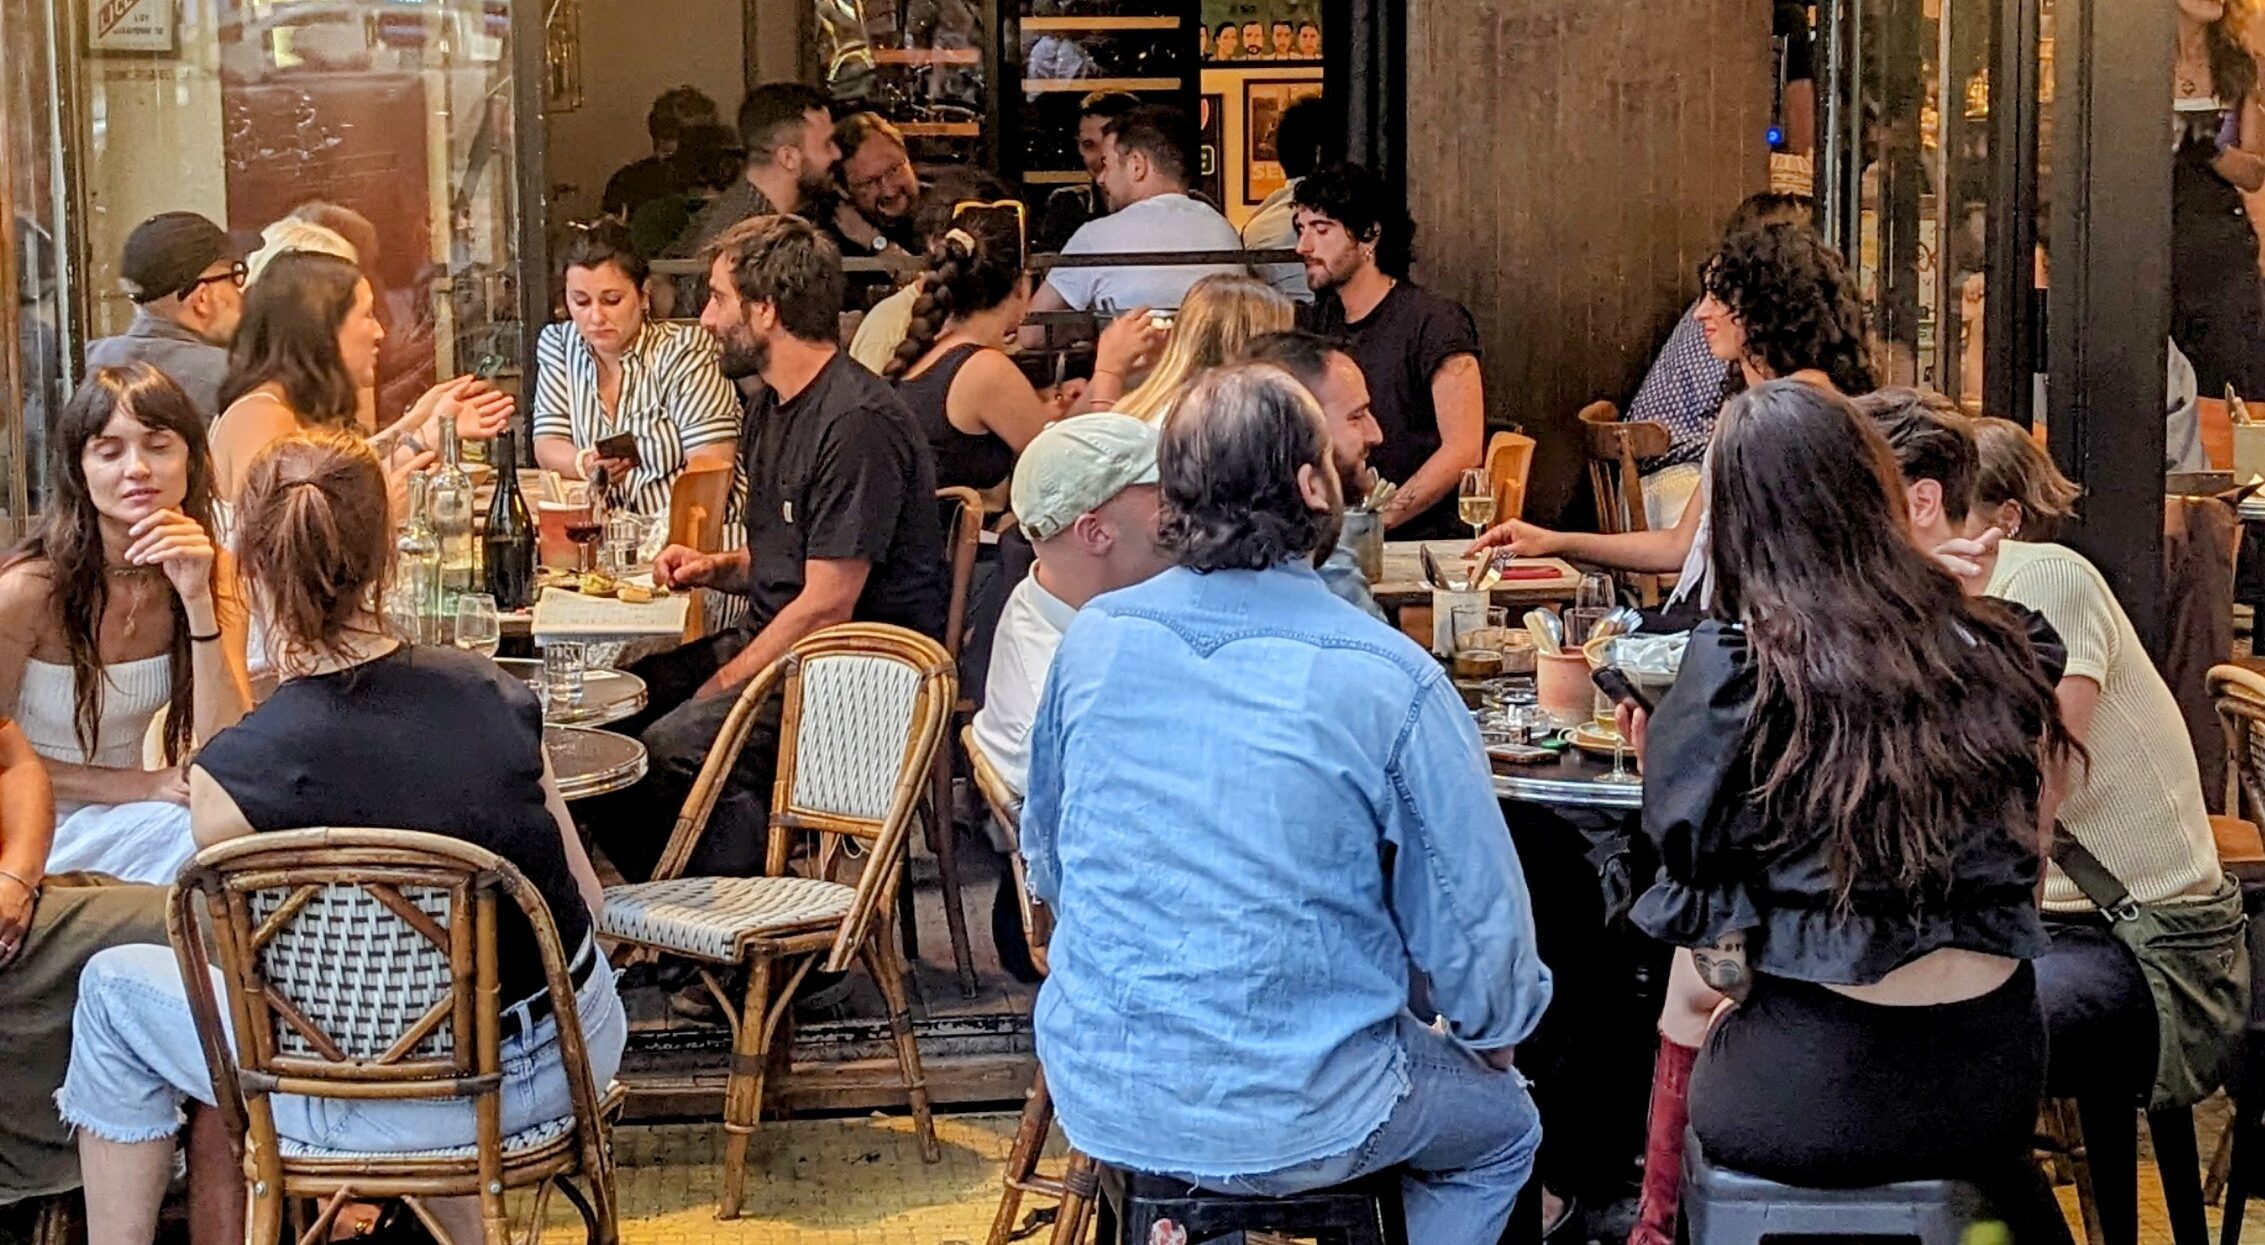 Locals are celebrating 'la rentrée' in a wine bar.